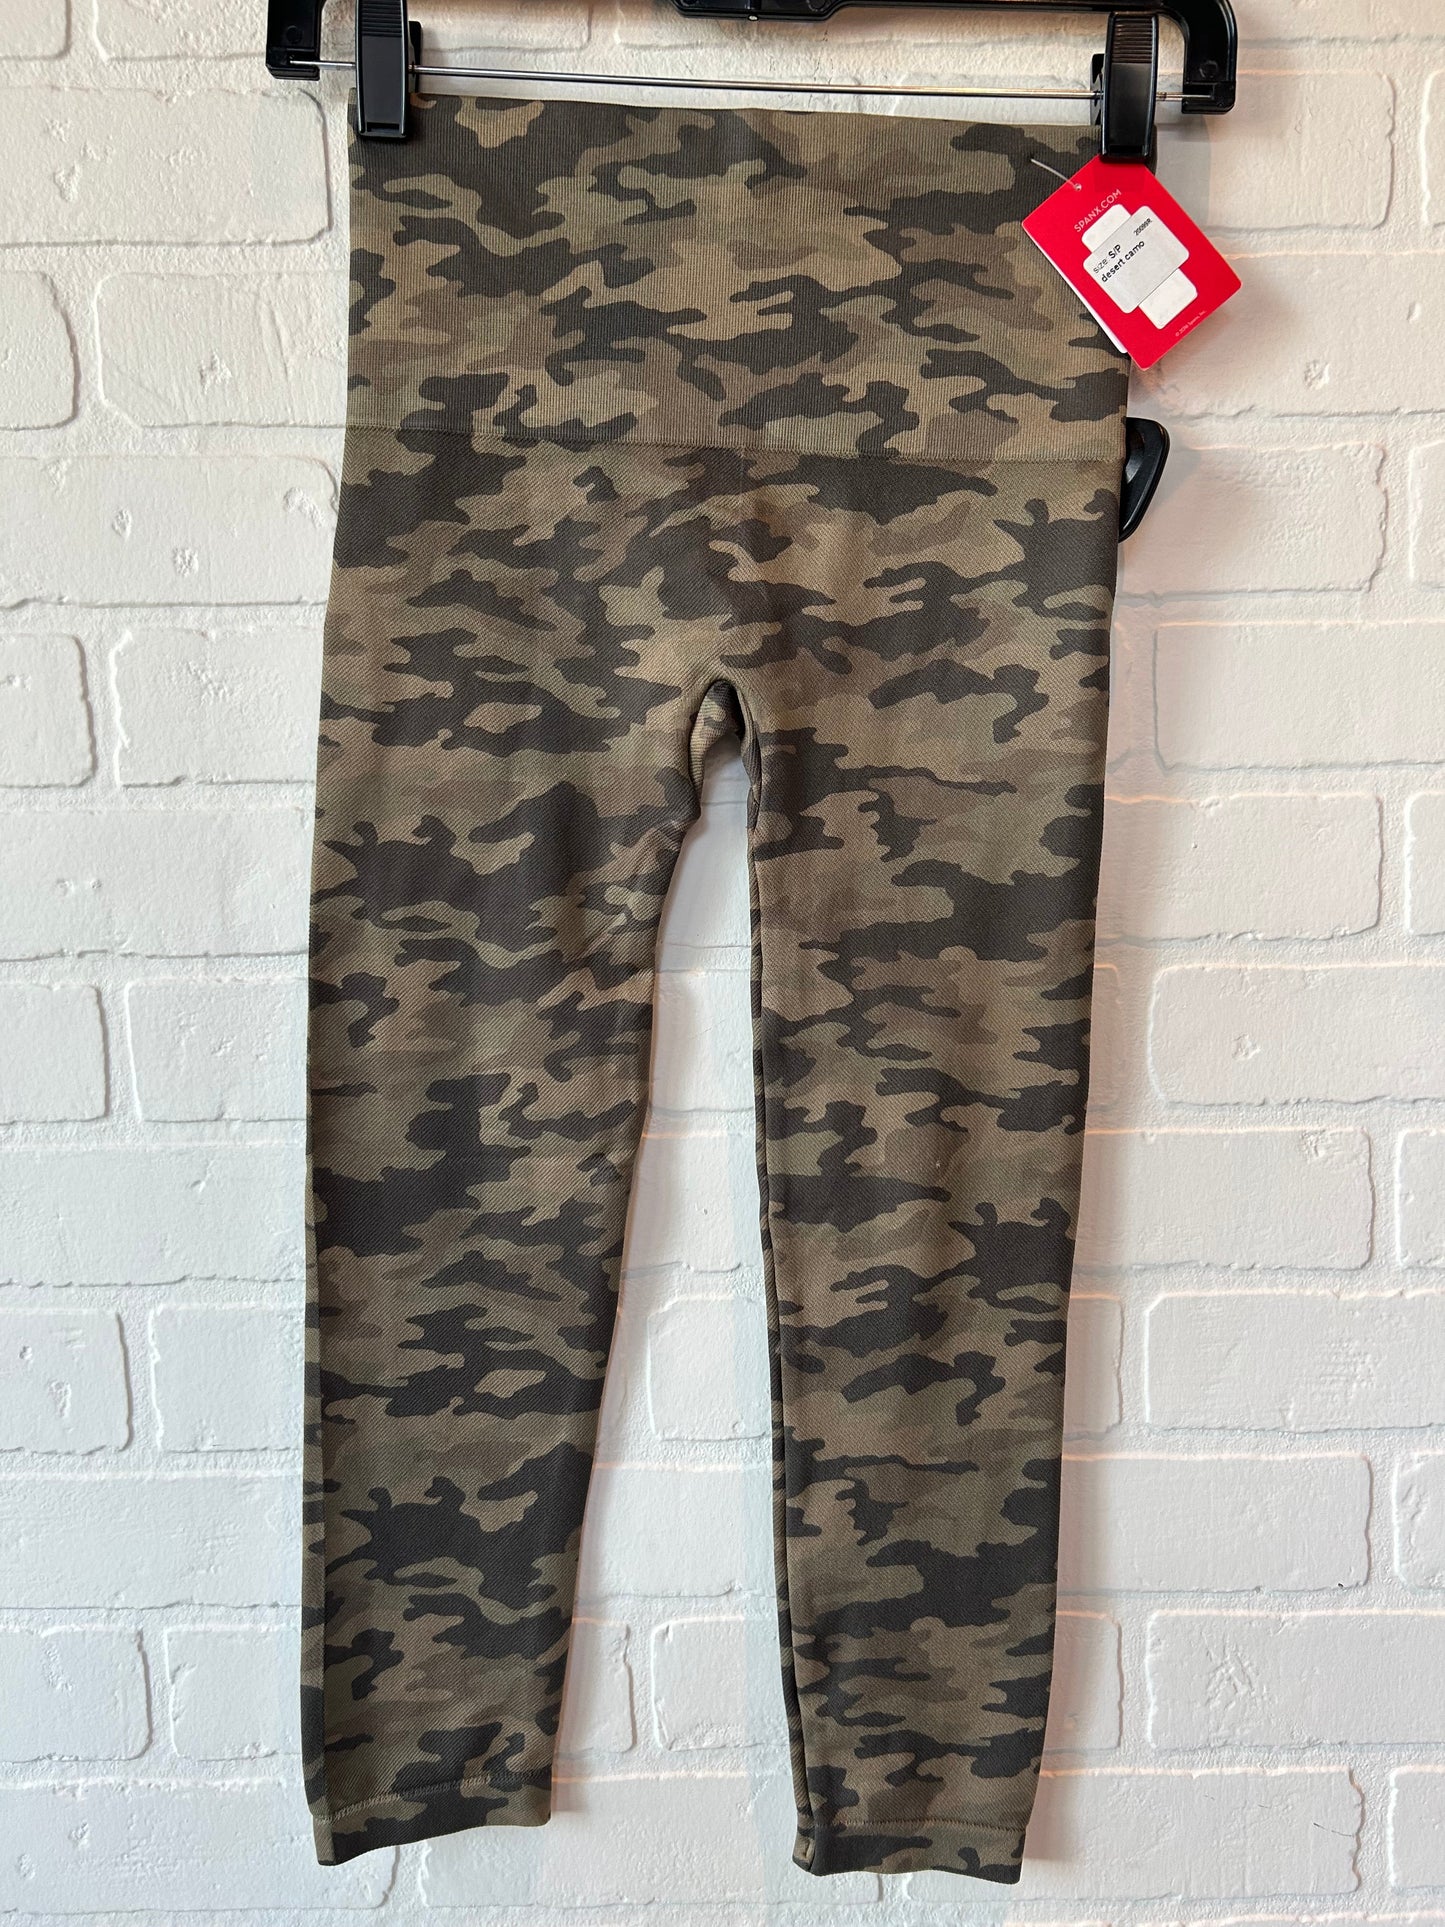 Camouflage Print Pants Leggings Spanx, Size 4